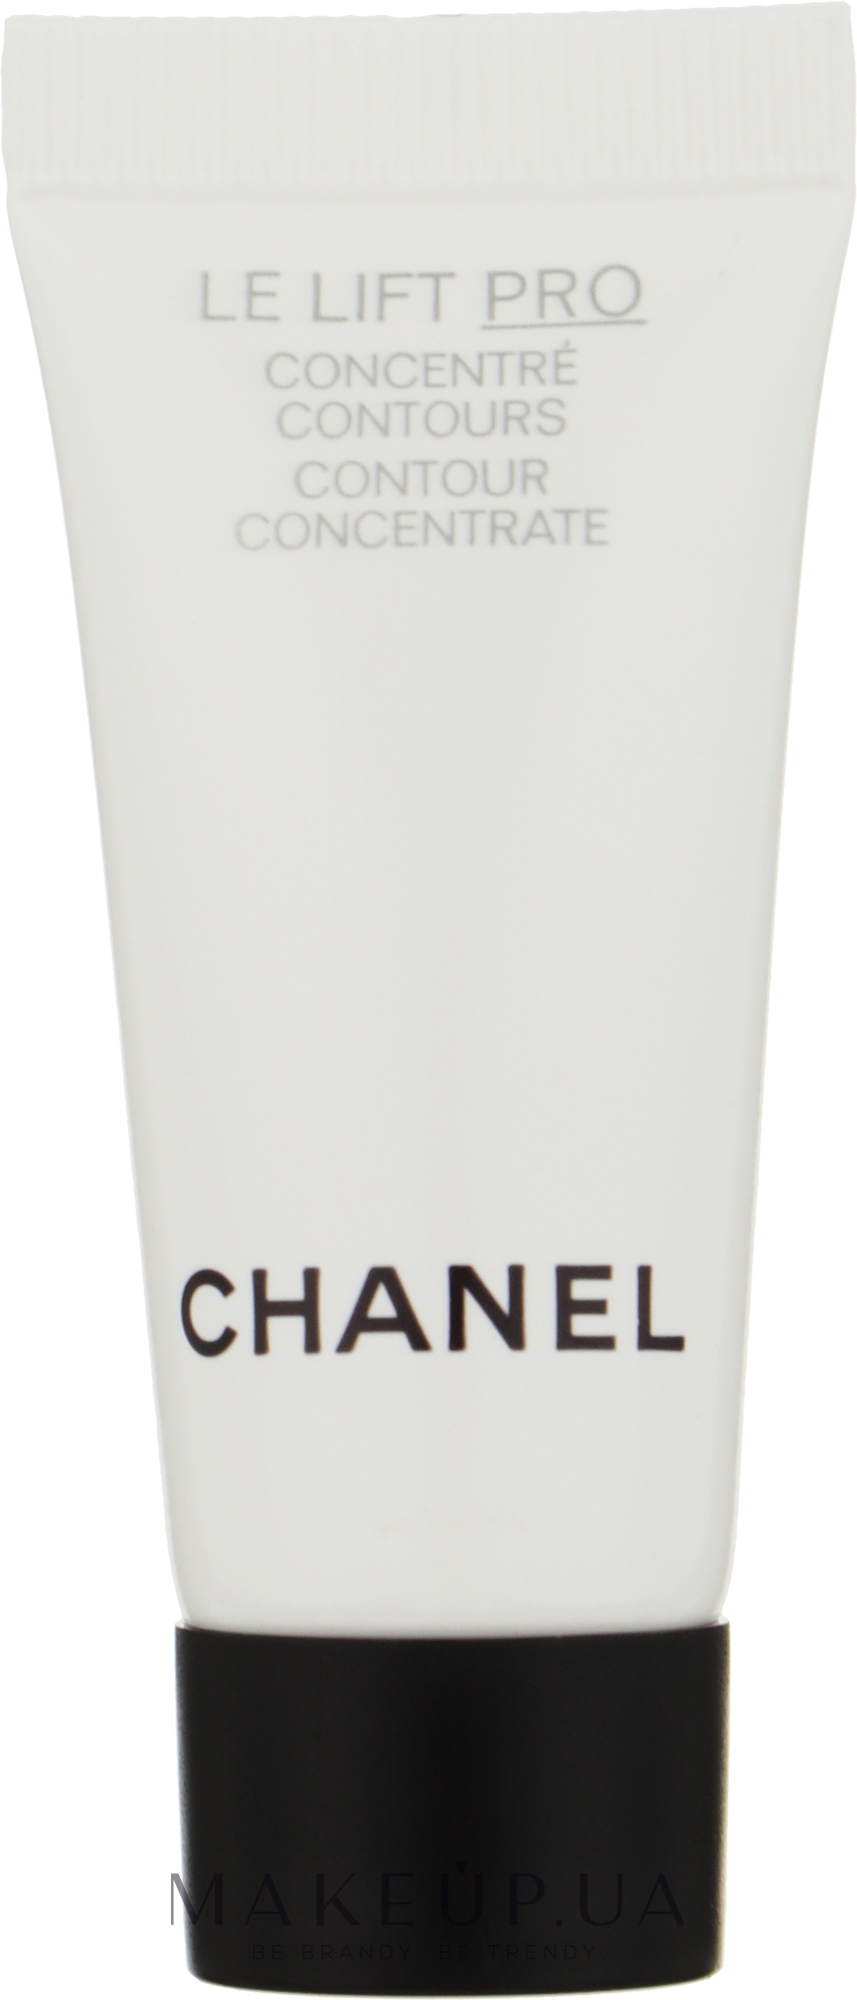 Chanel Le Lift Pro Concentre Contours (мини) - Моделирующий